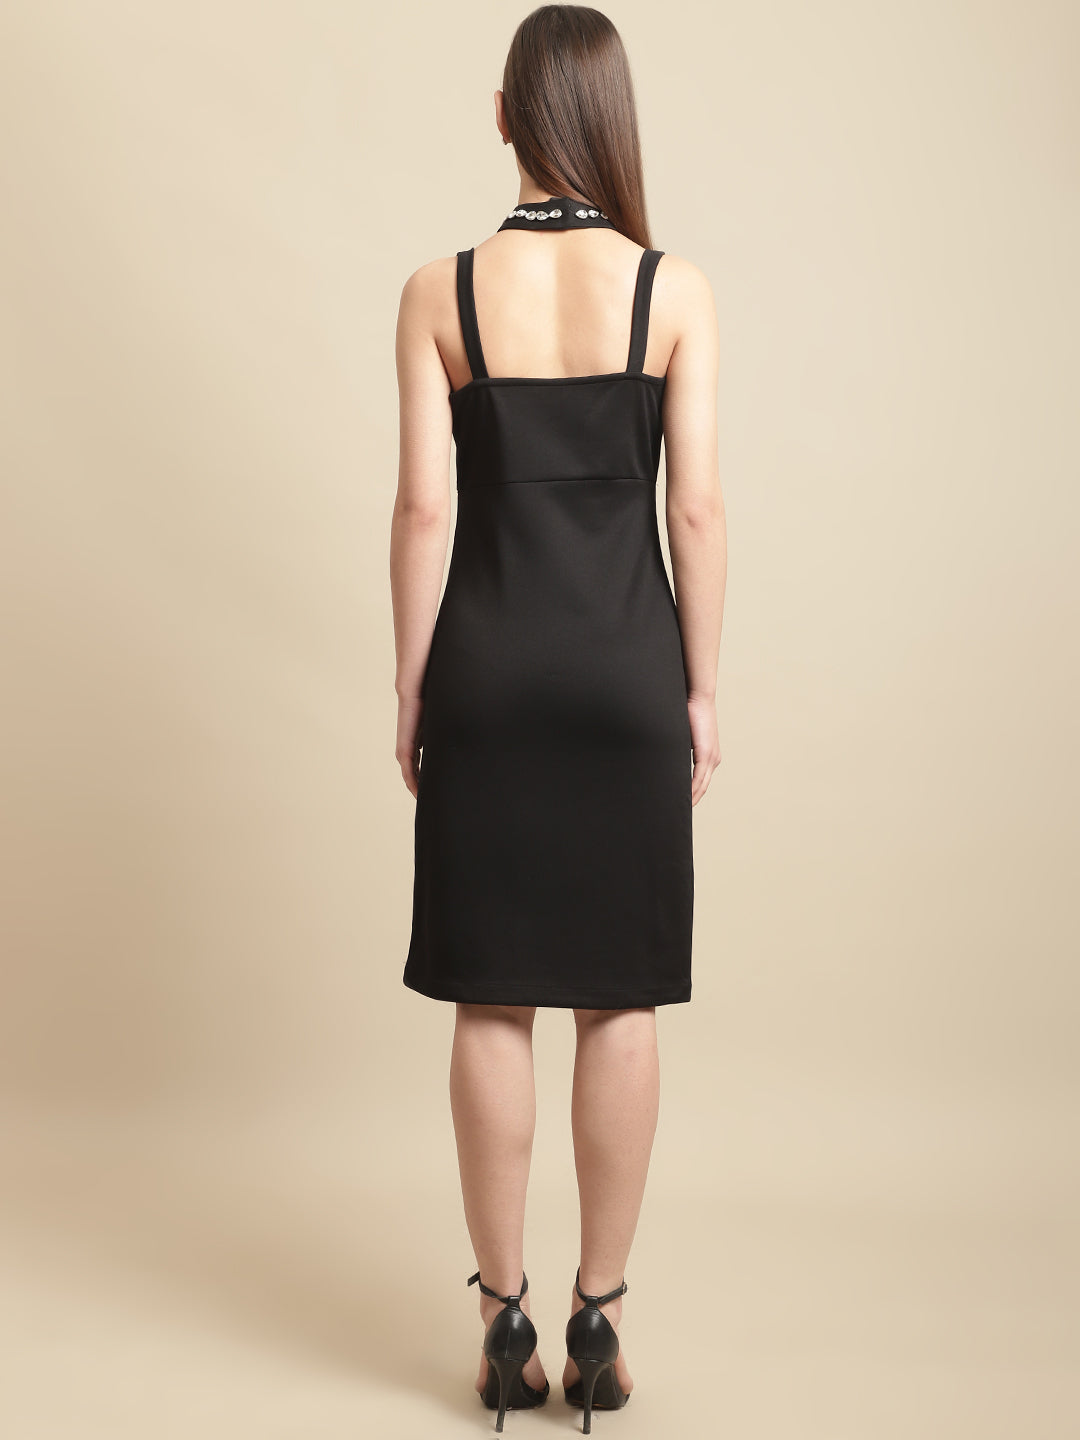 Blanc9 Black Neck Embellished Bodycon Dress-B9DR143